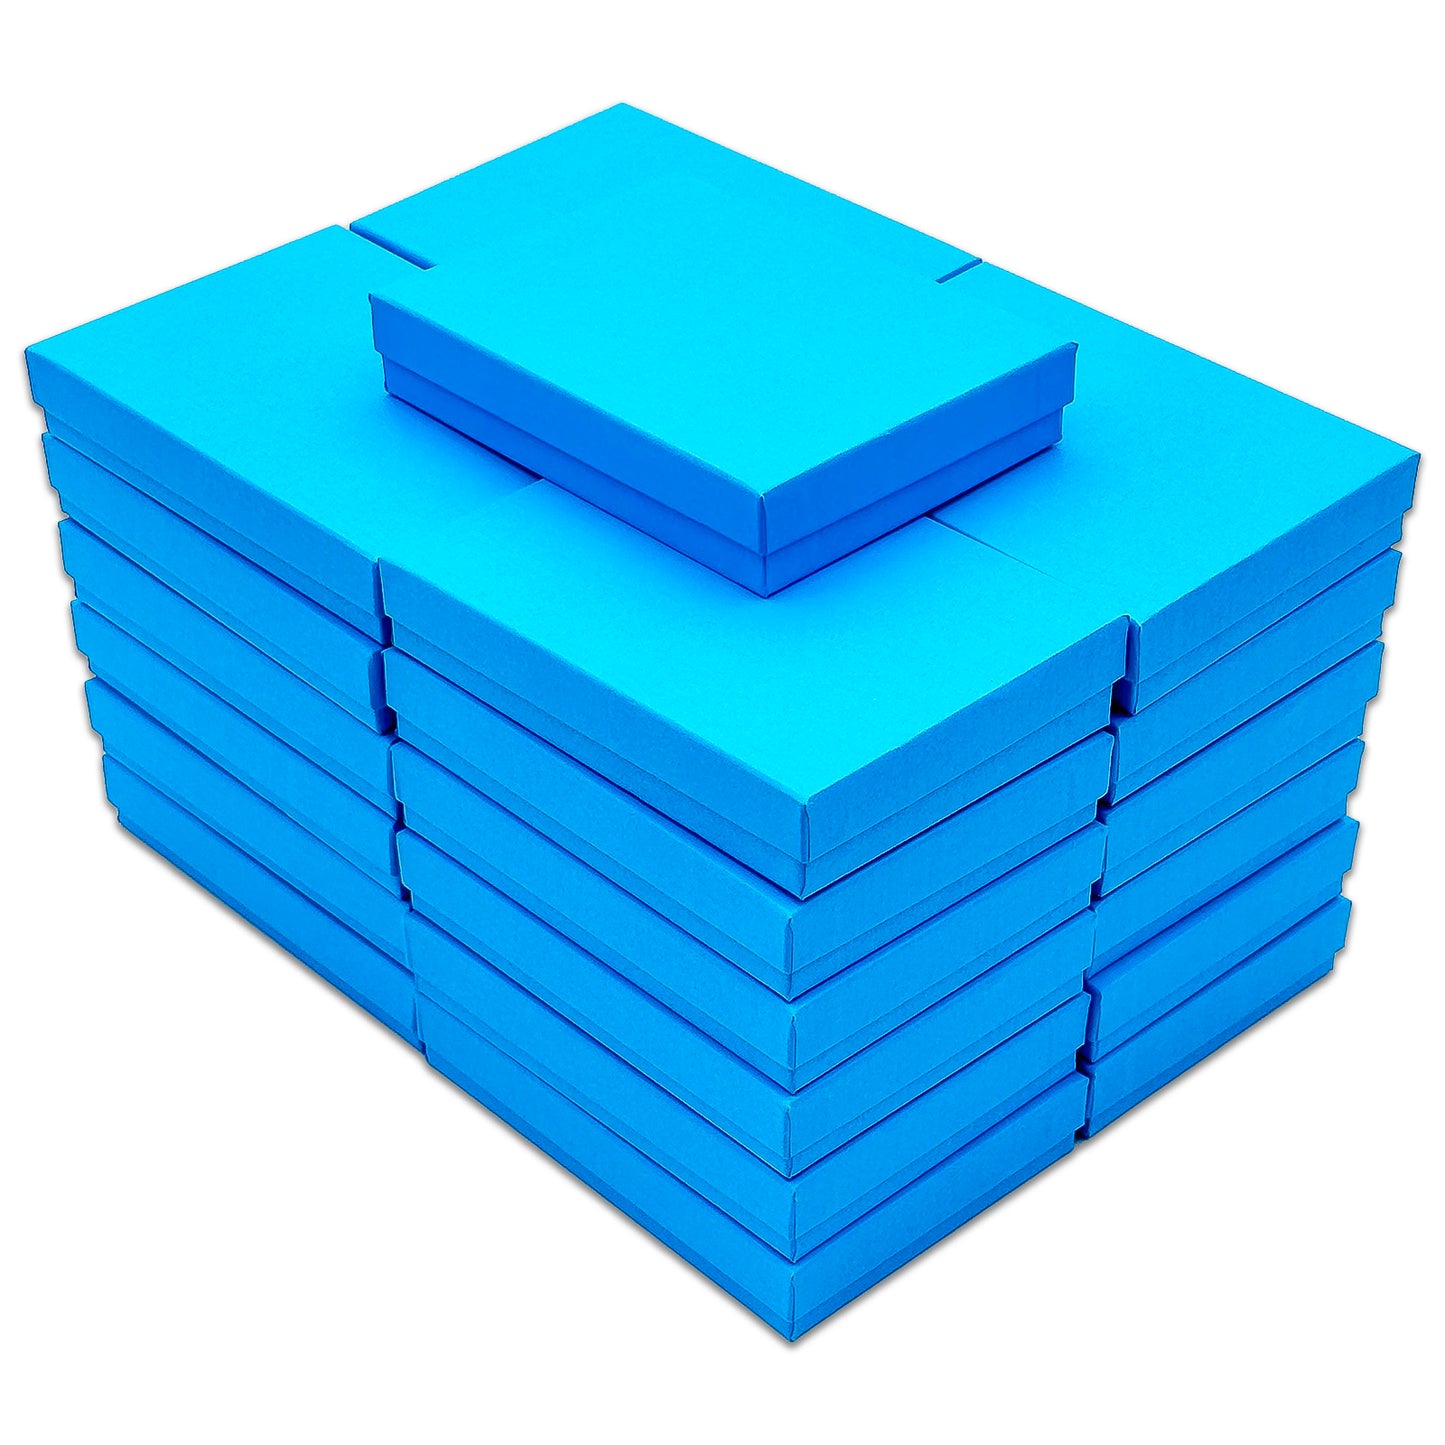 5 7/16" x 3 15/16" x 1" Azure Blue Cotton Filled Paper Box